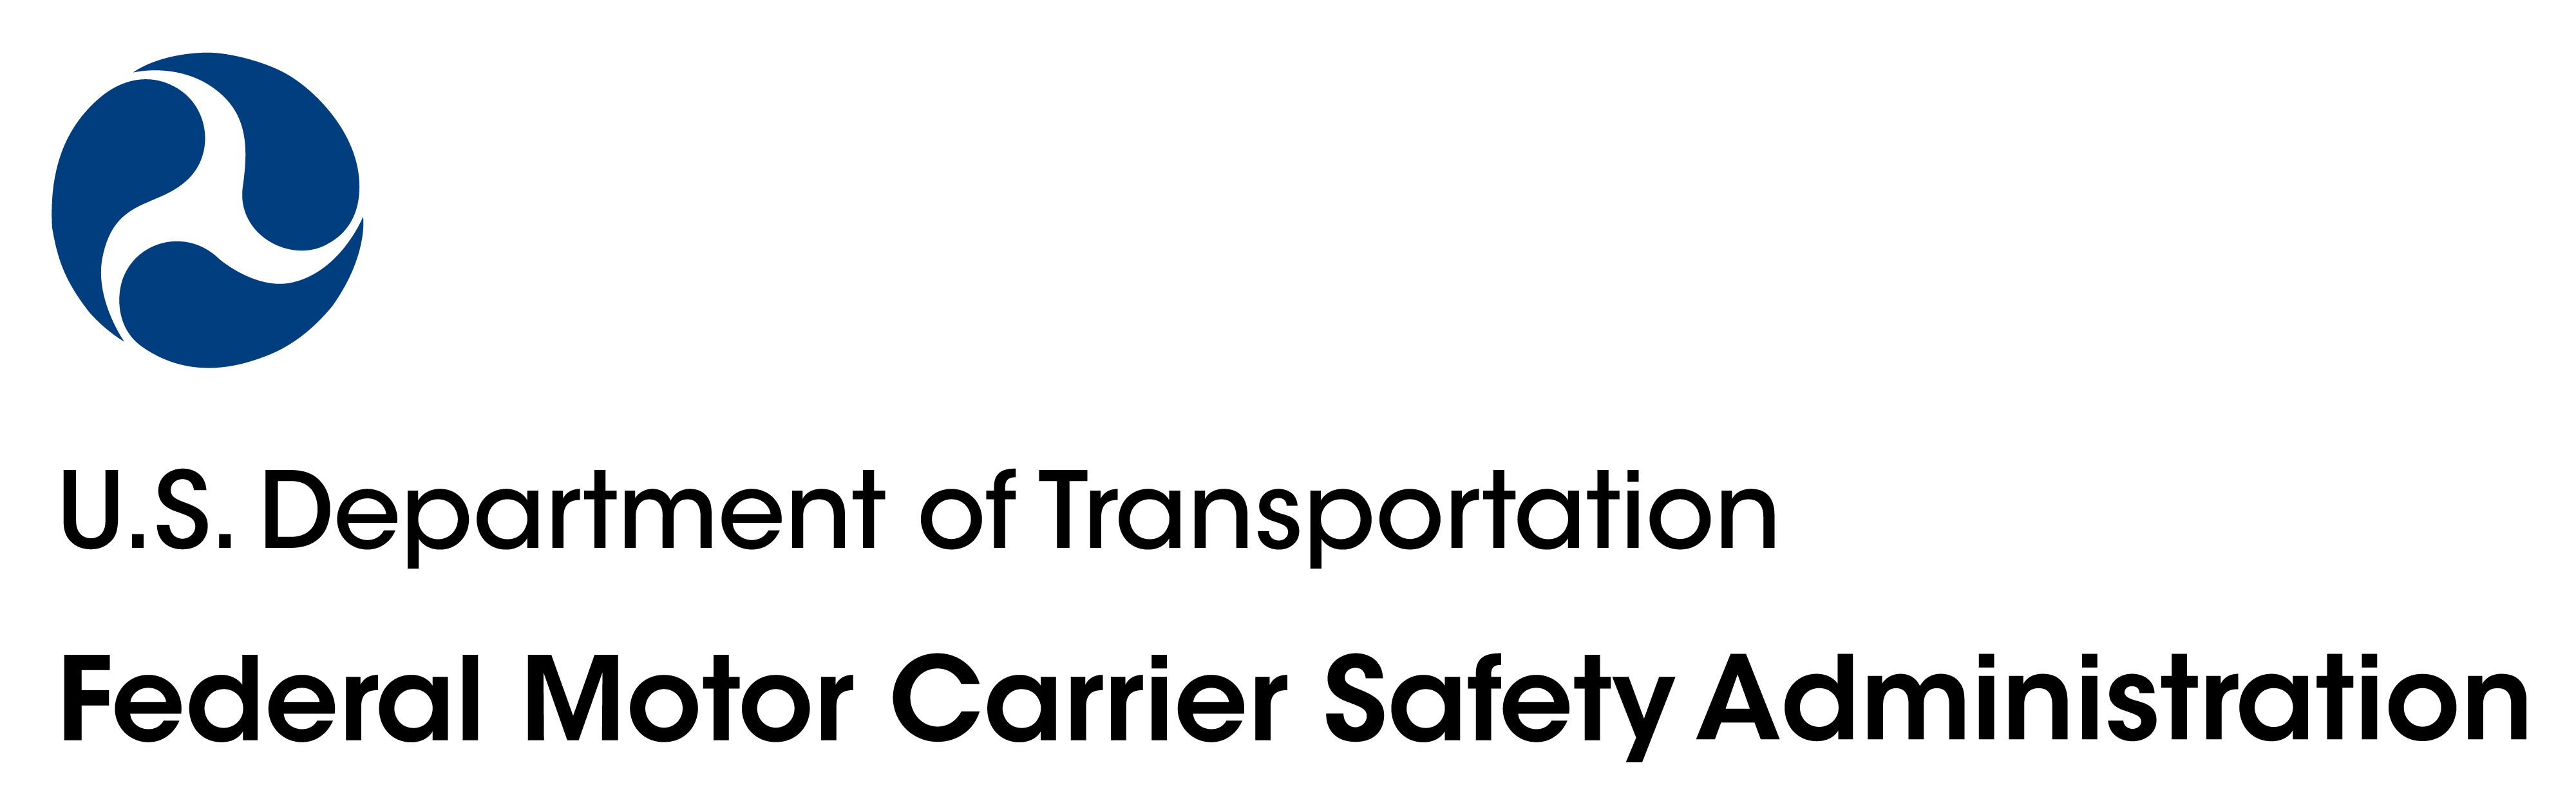 Federal Motor Carrier Safety Administration logo 